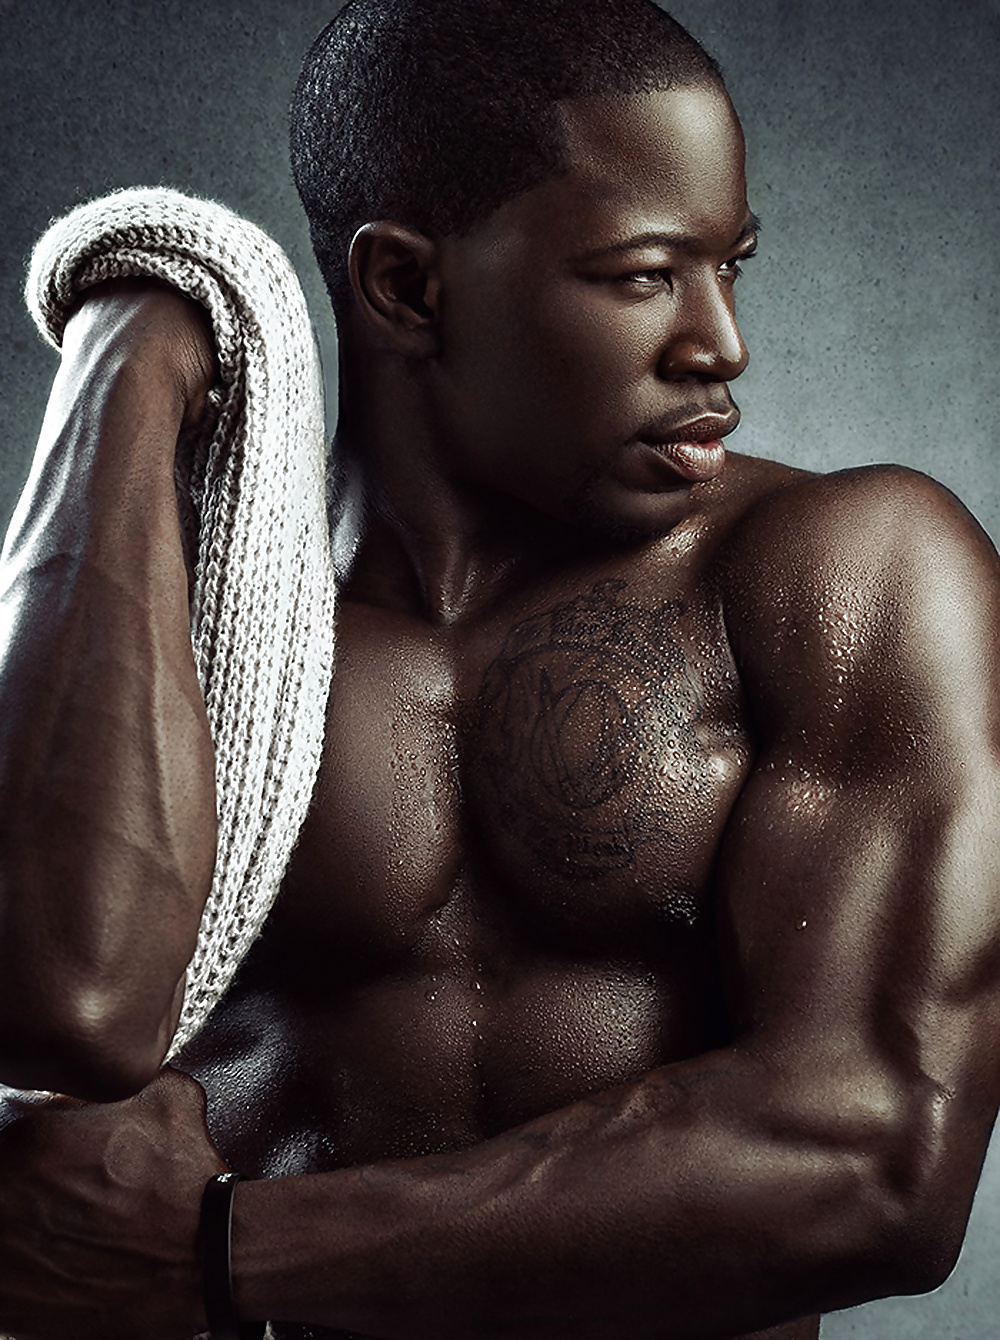 All naked black men 🌈 Black Men Magazine Naked acsfloralande